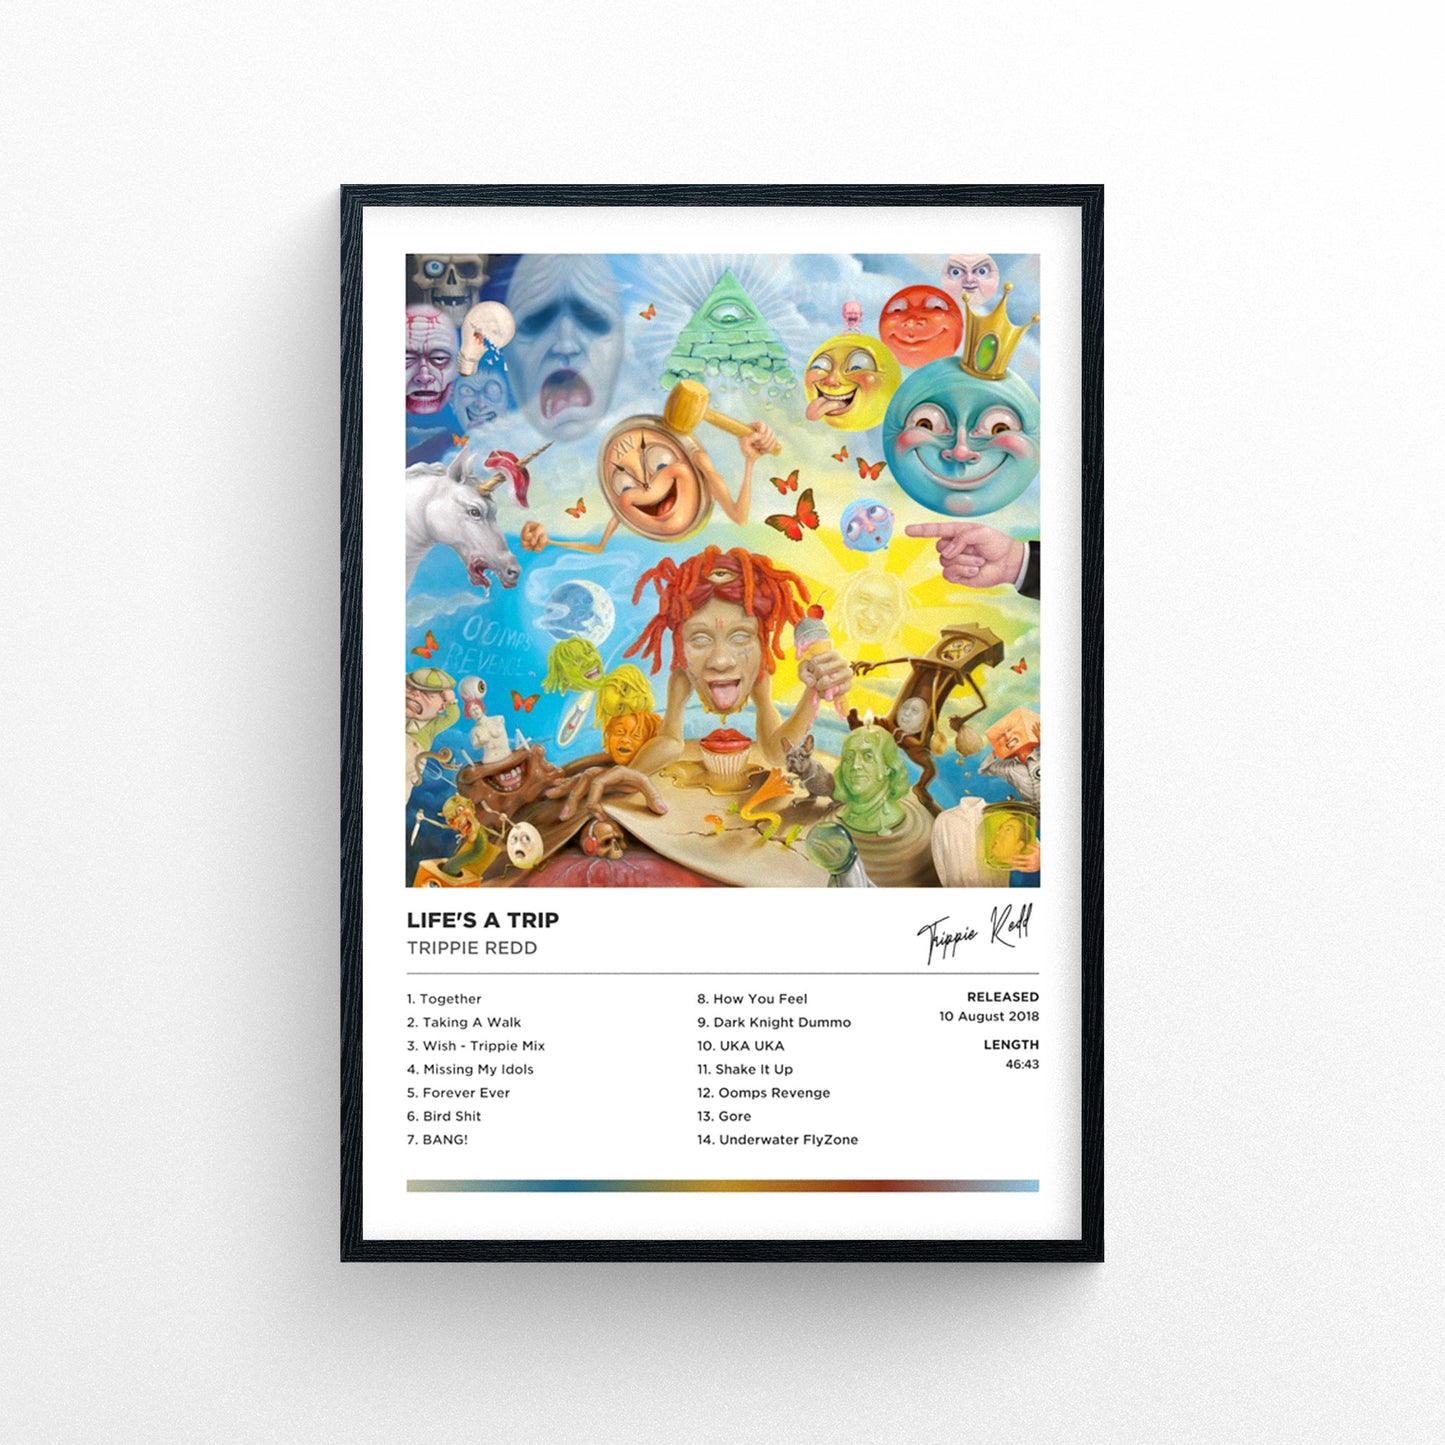 Trippie Redd - Life's A Trip Framed Poster Print | Polaroid Style | Album Cover Artwork